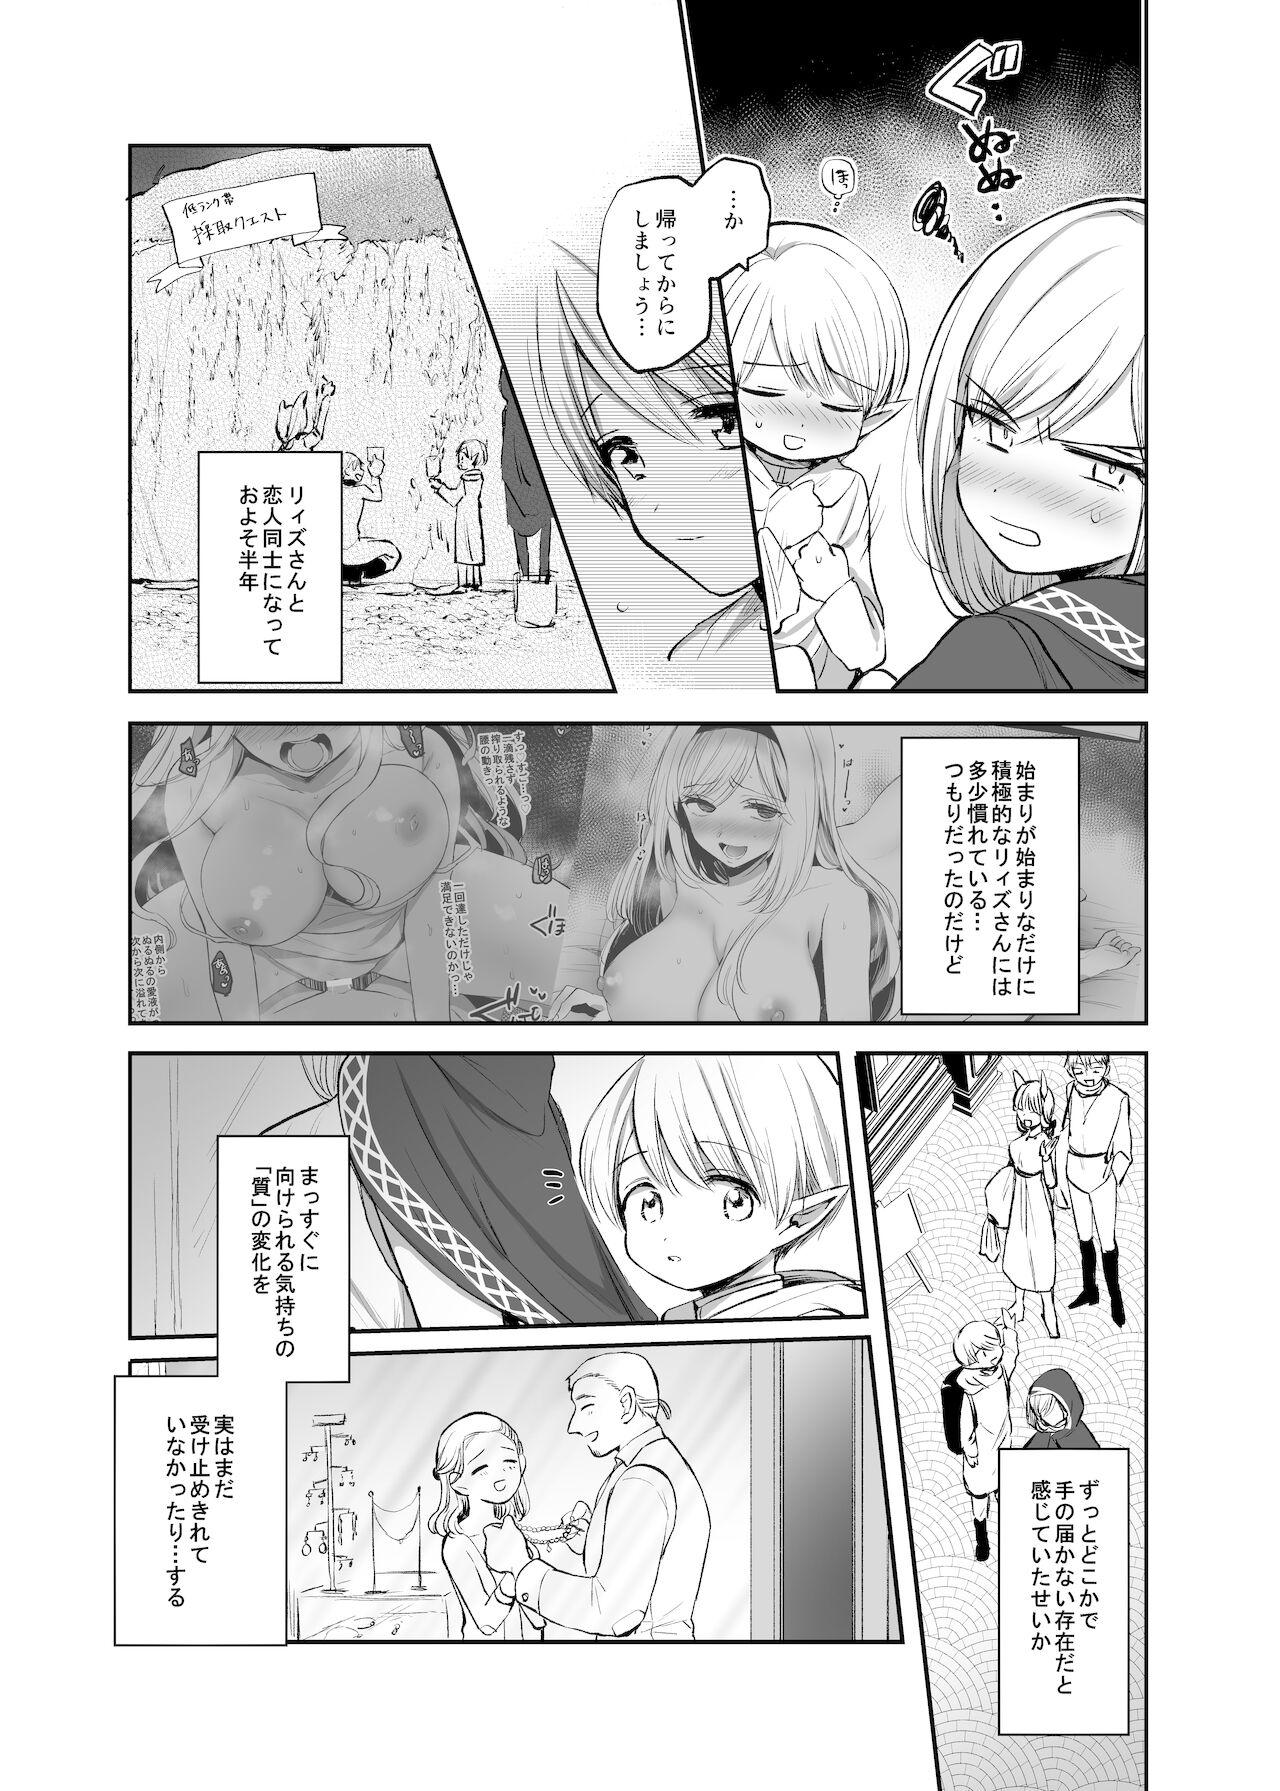 Nurugel 嫌われ女を助けたら、ハッピー大団円を迎えた! - Original Uncut - Page 11